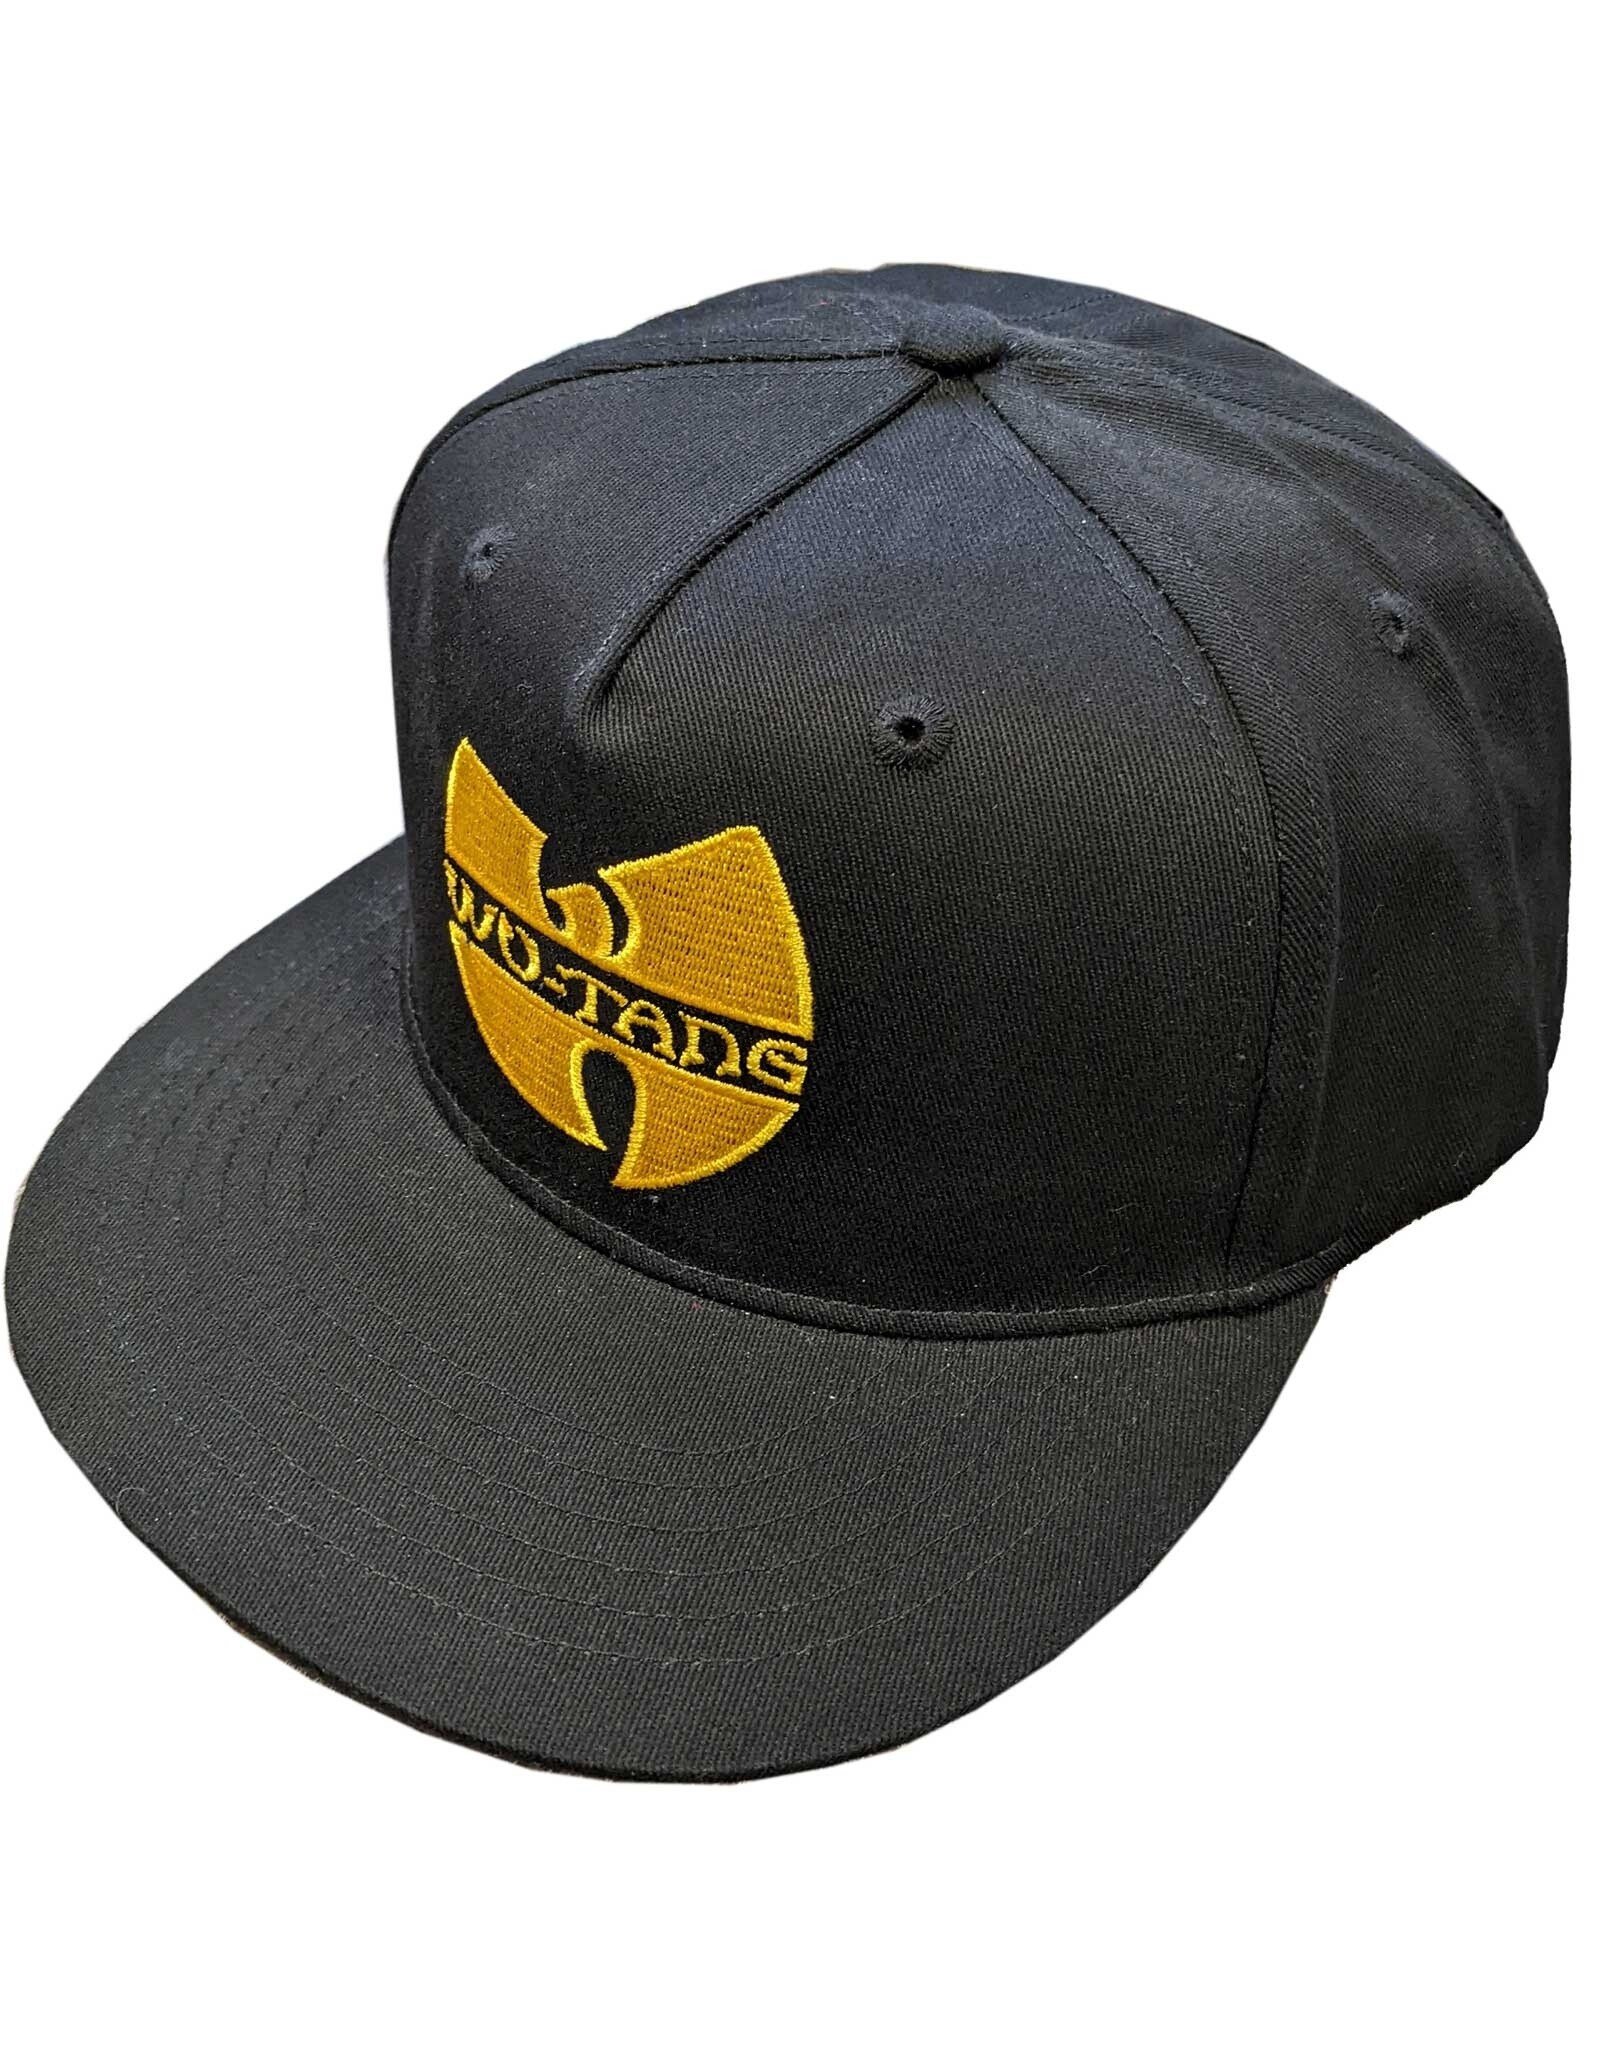 The Wu-Tang Clan / Classic Logo Snapback Baseball Cap